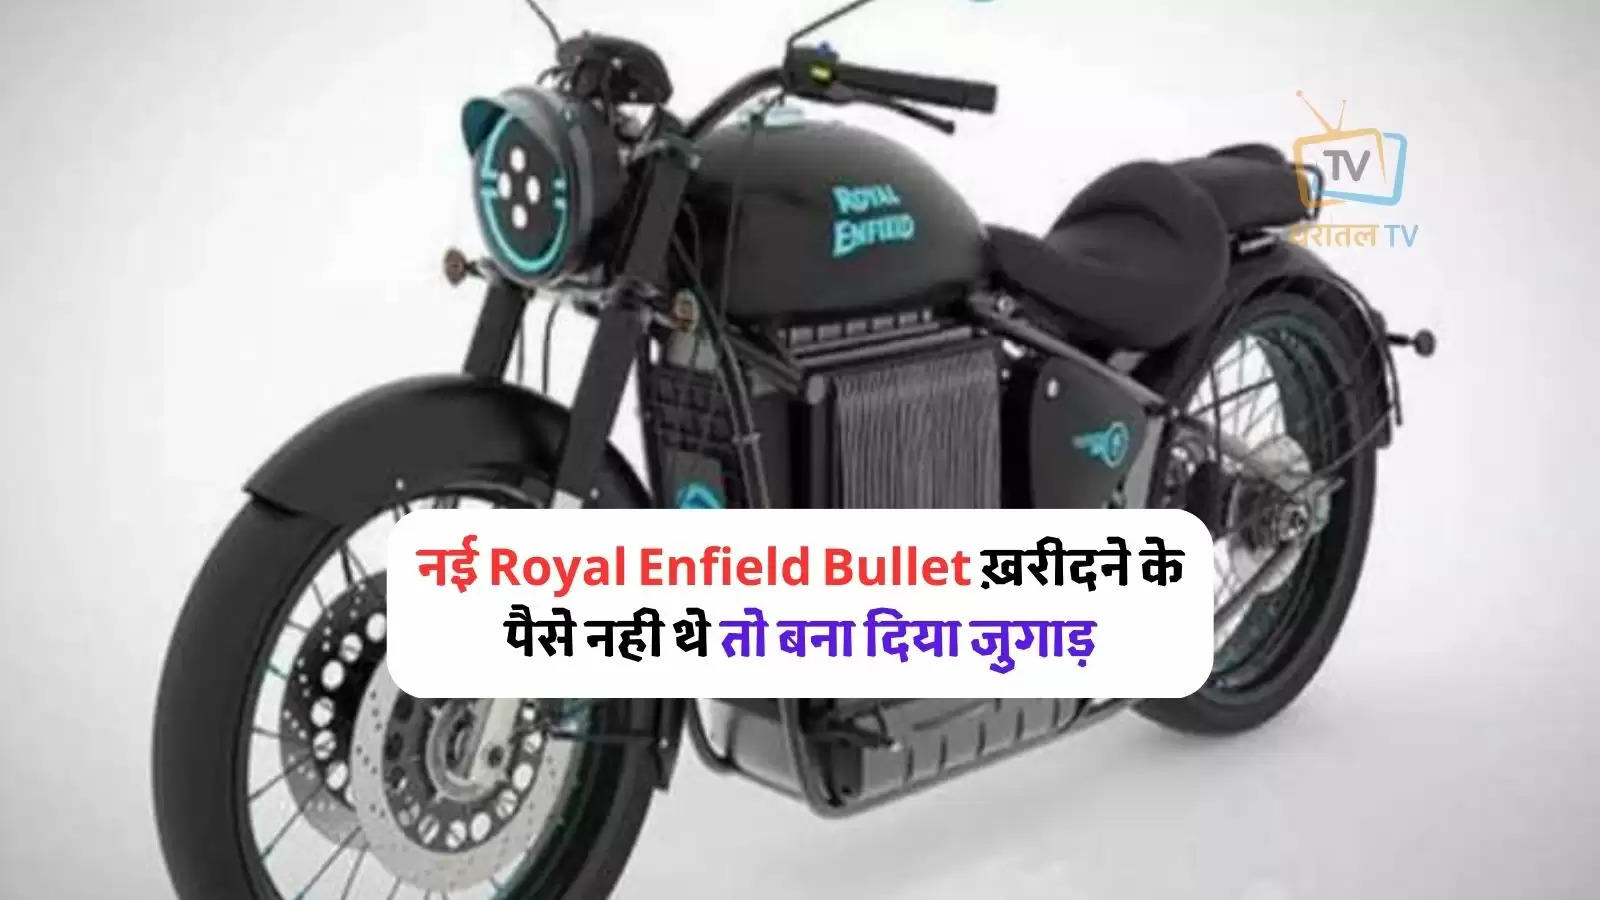 wooden-made-royal-enfield-bullet-bike-viral-on-social-media